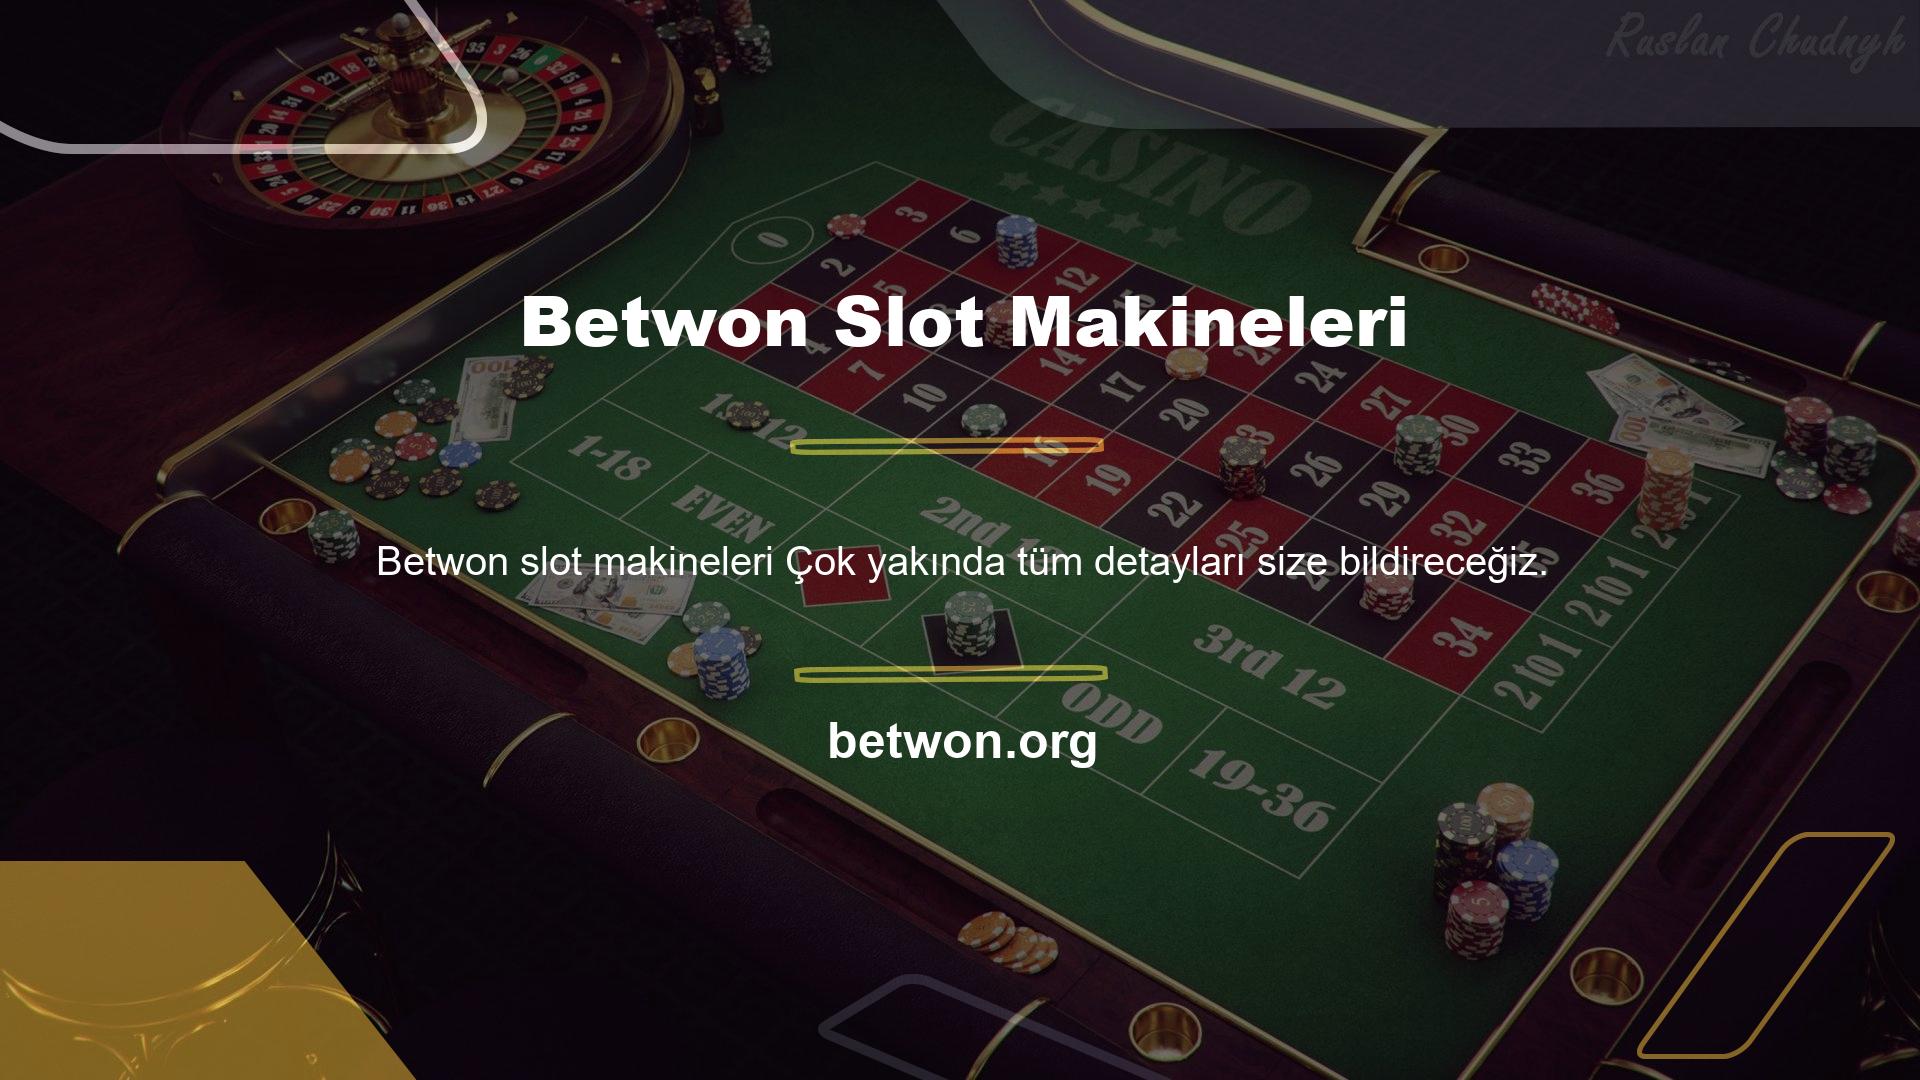 Betwon slot oyunlarına ilgi